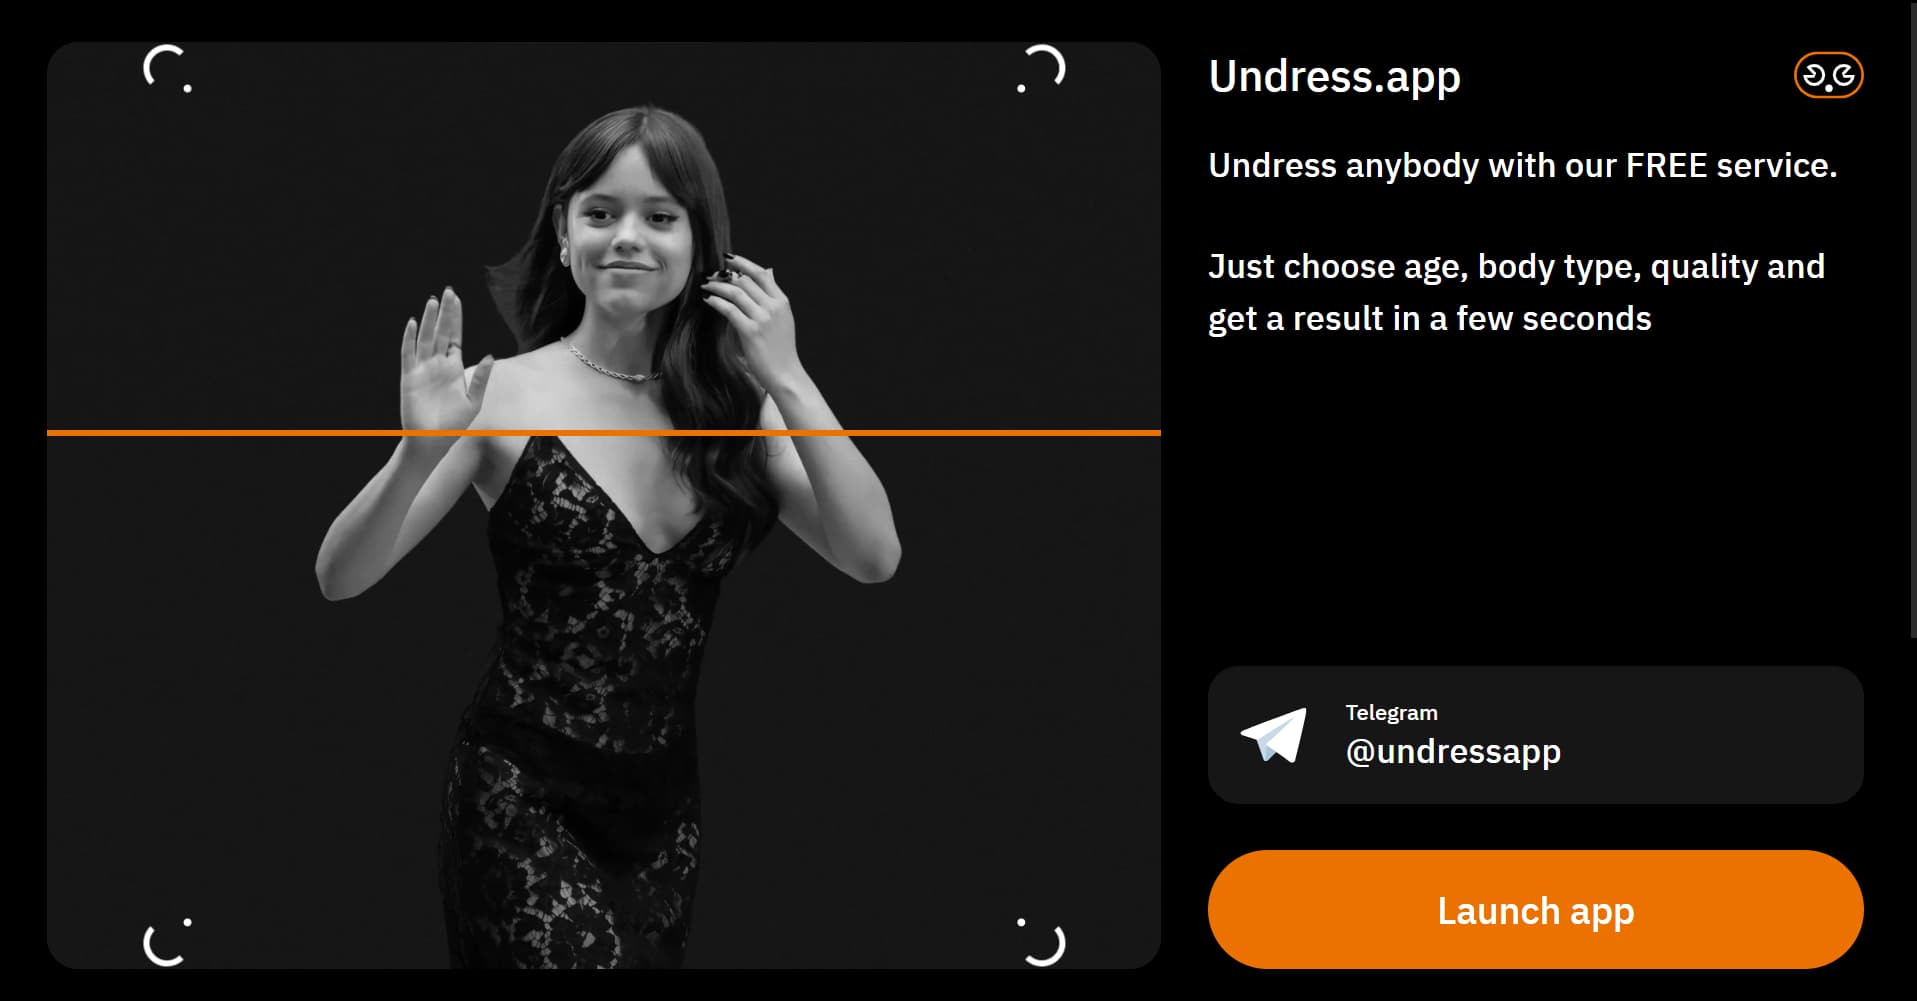 Undress.app reviews